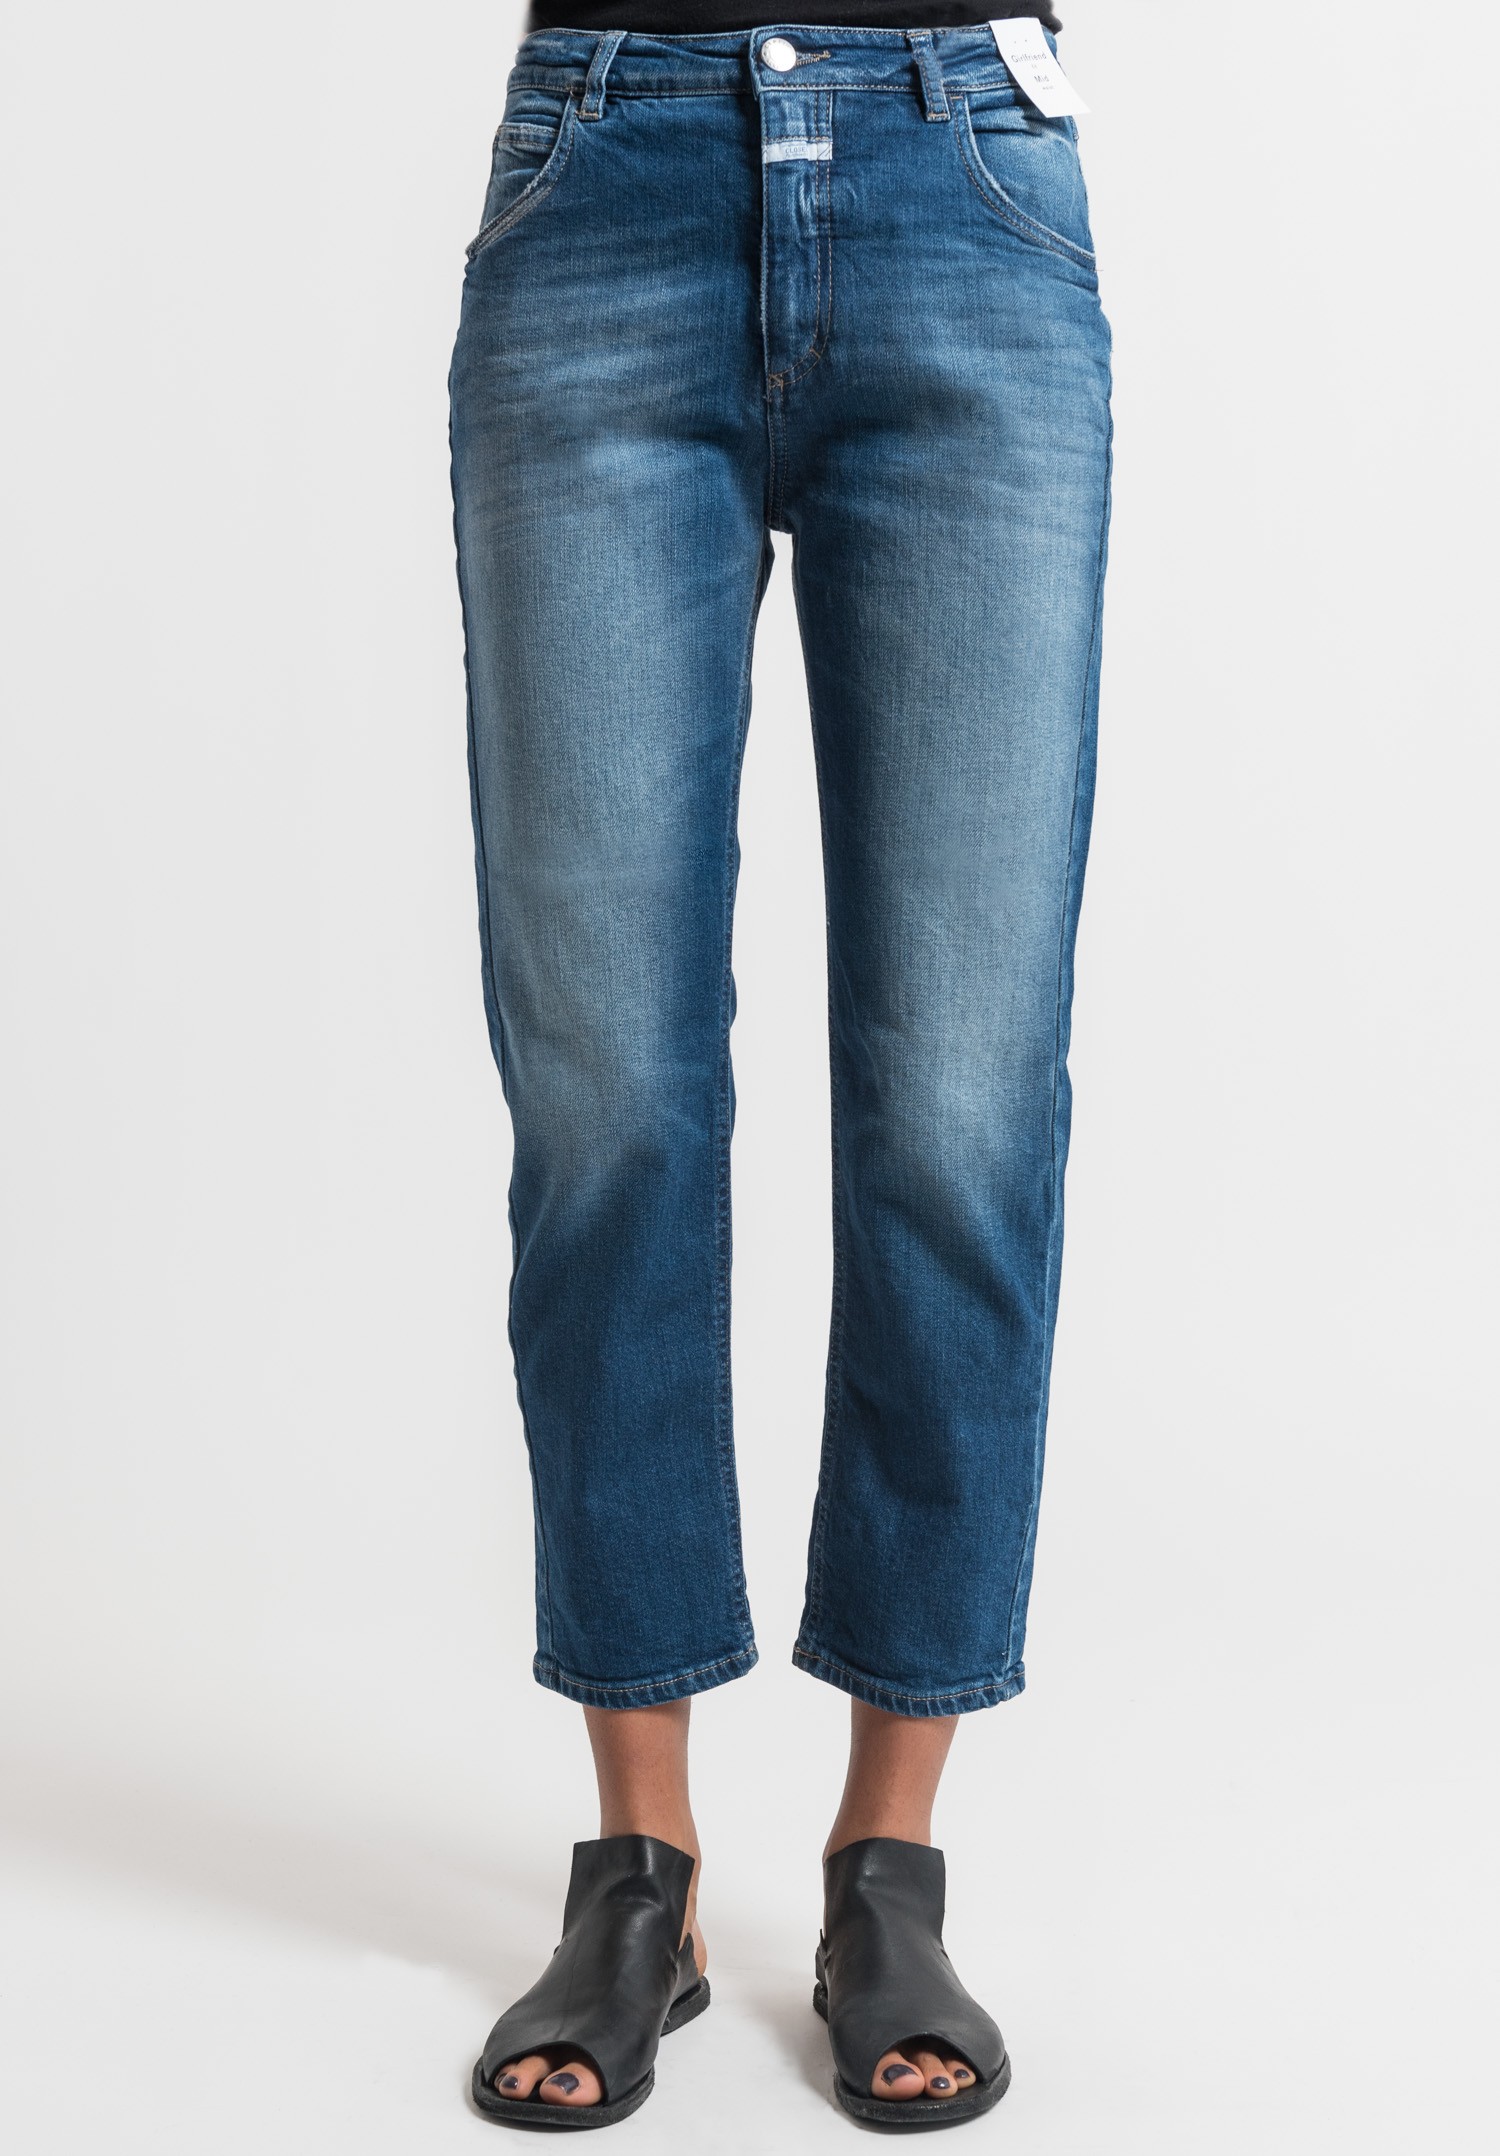 jeans short pant for ladies